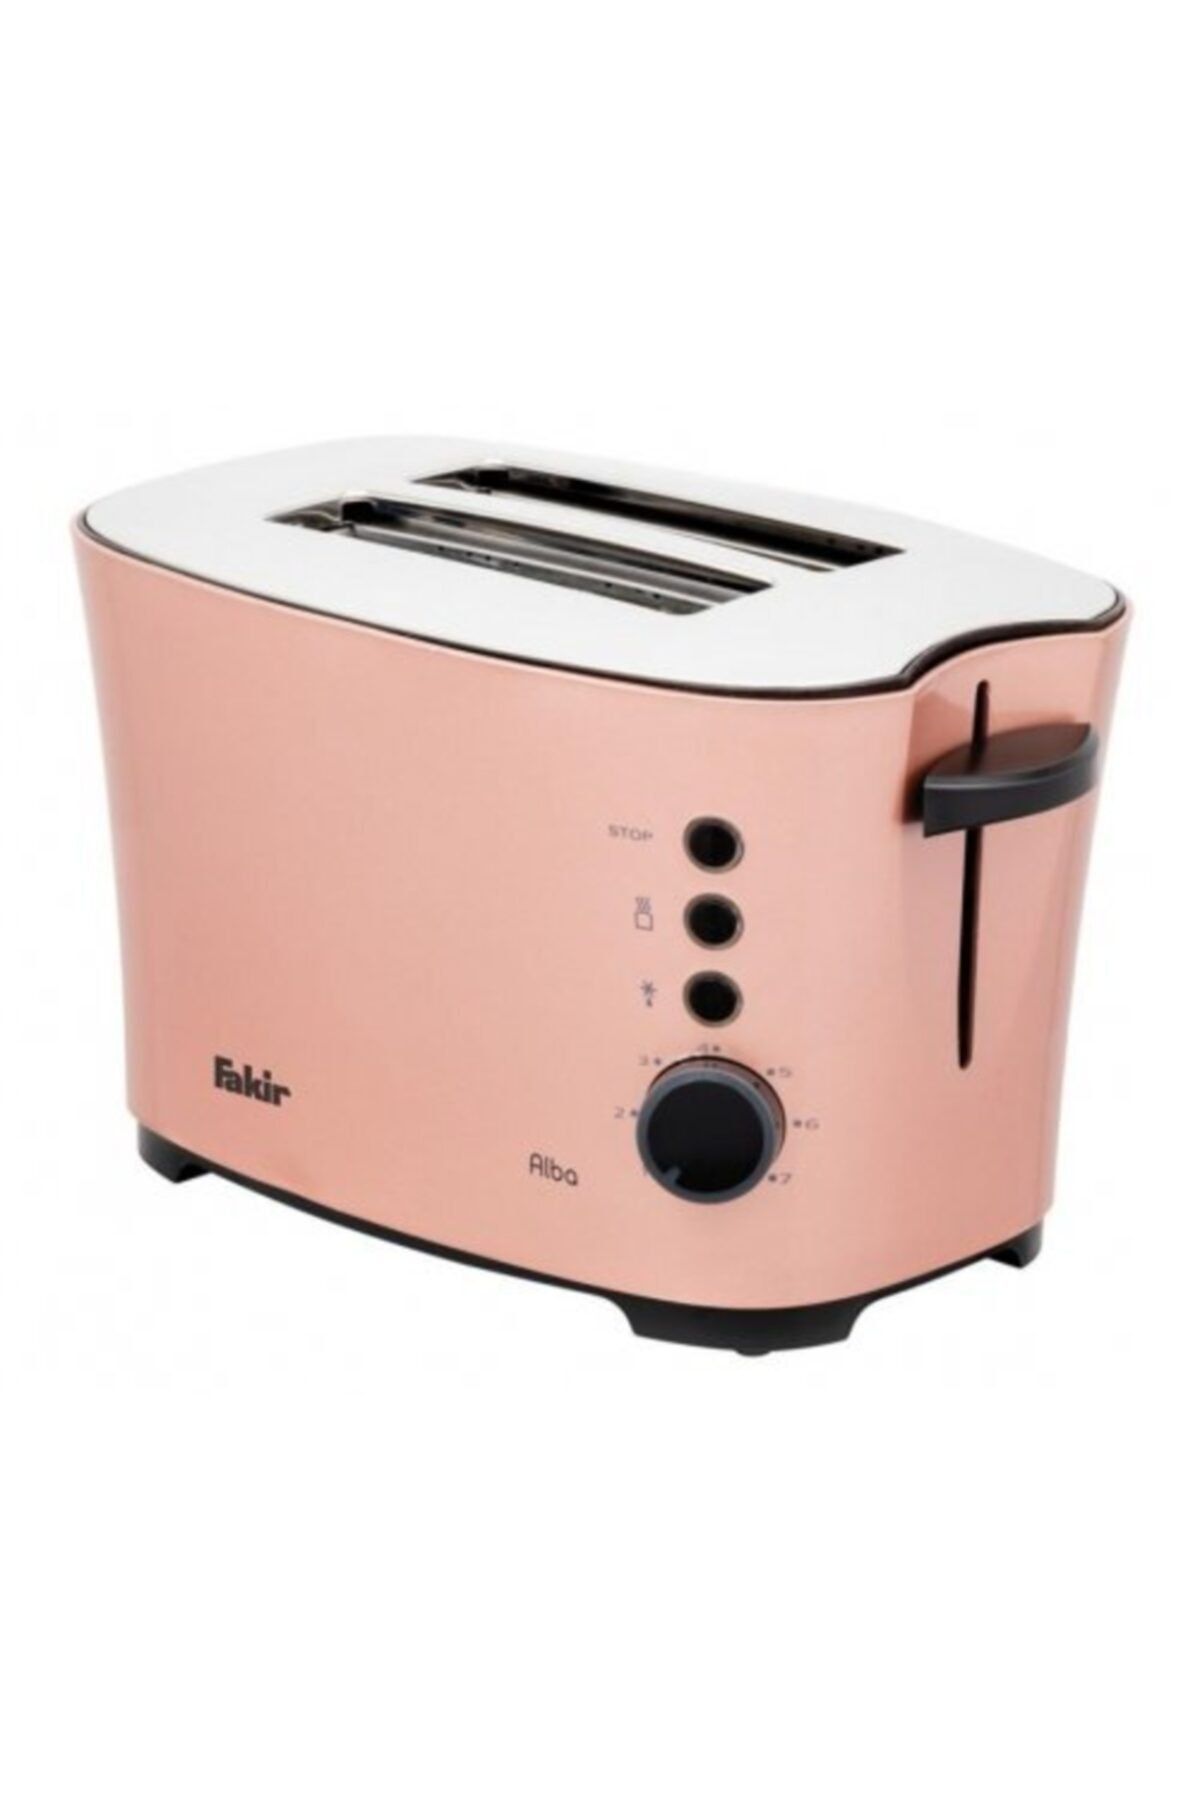 Fakir Alba Ekmek Kızartma Makinesi - Rosie Fakir Alba Rose